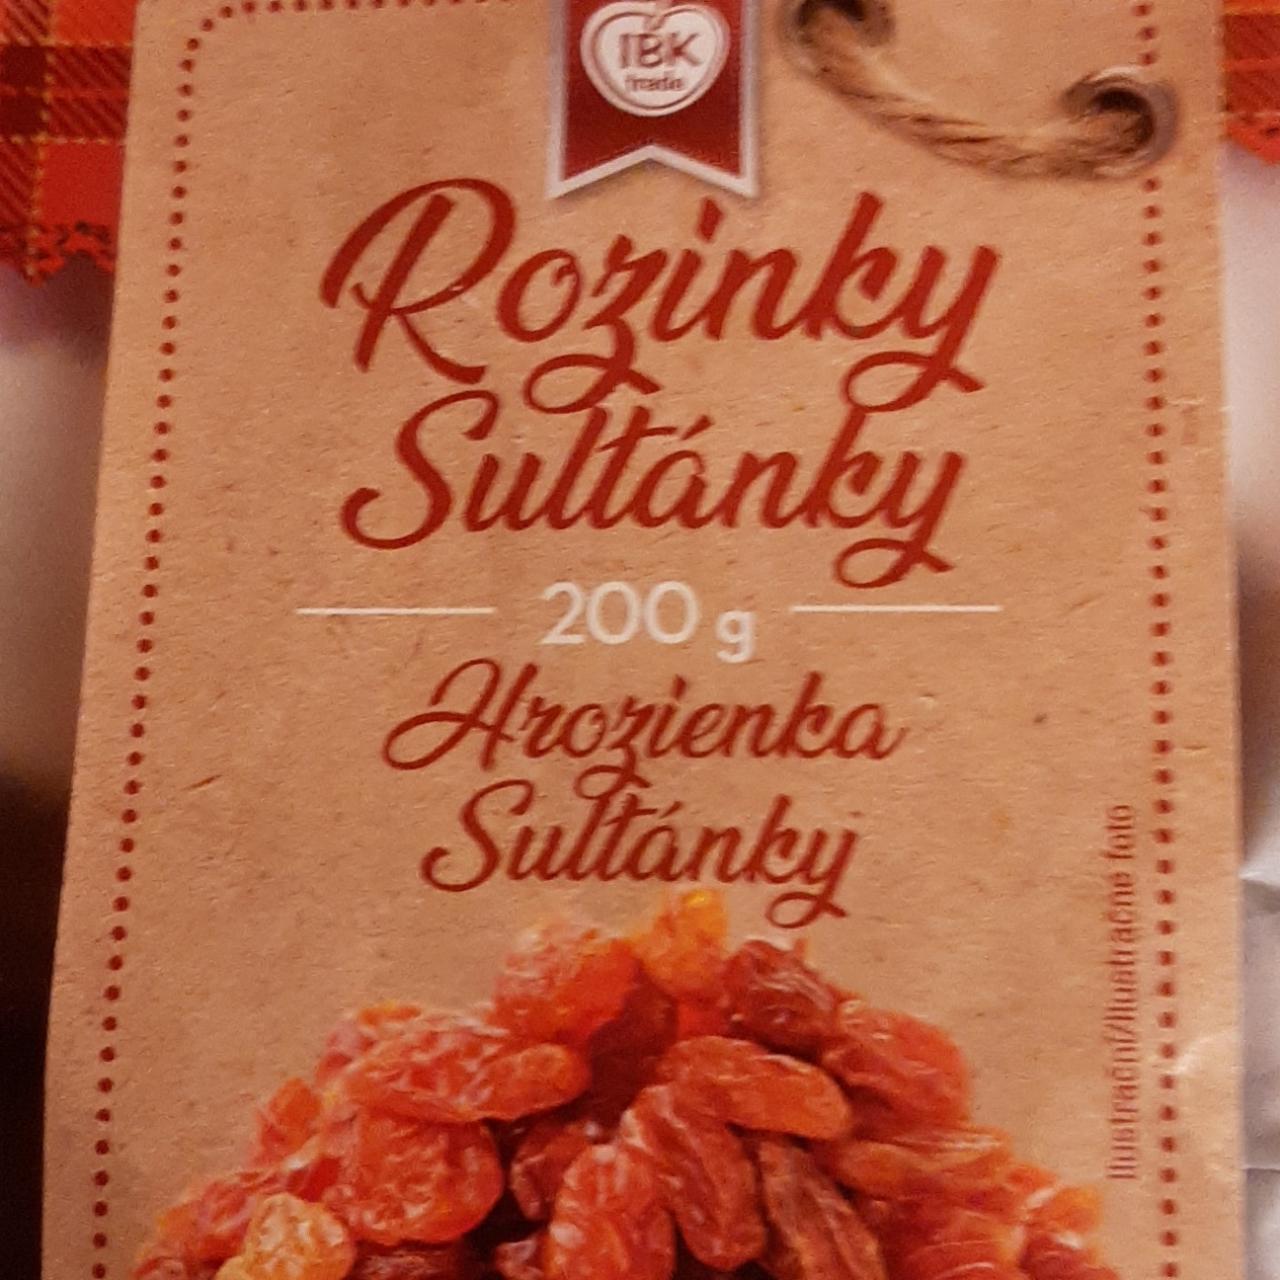 Fotografie - Rozinky sultánky IBK trade